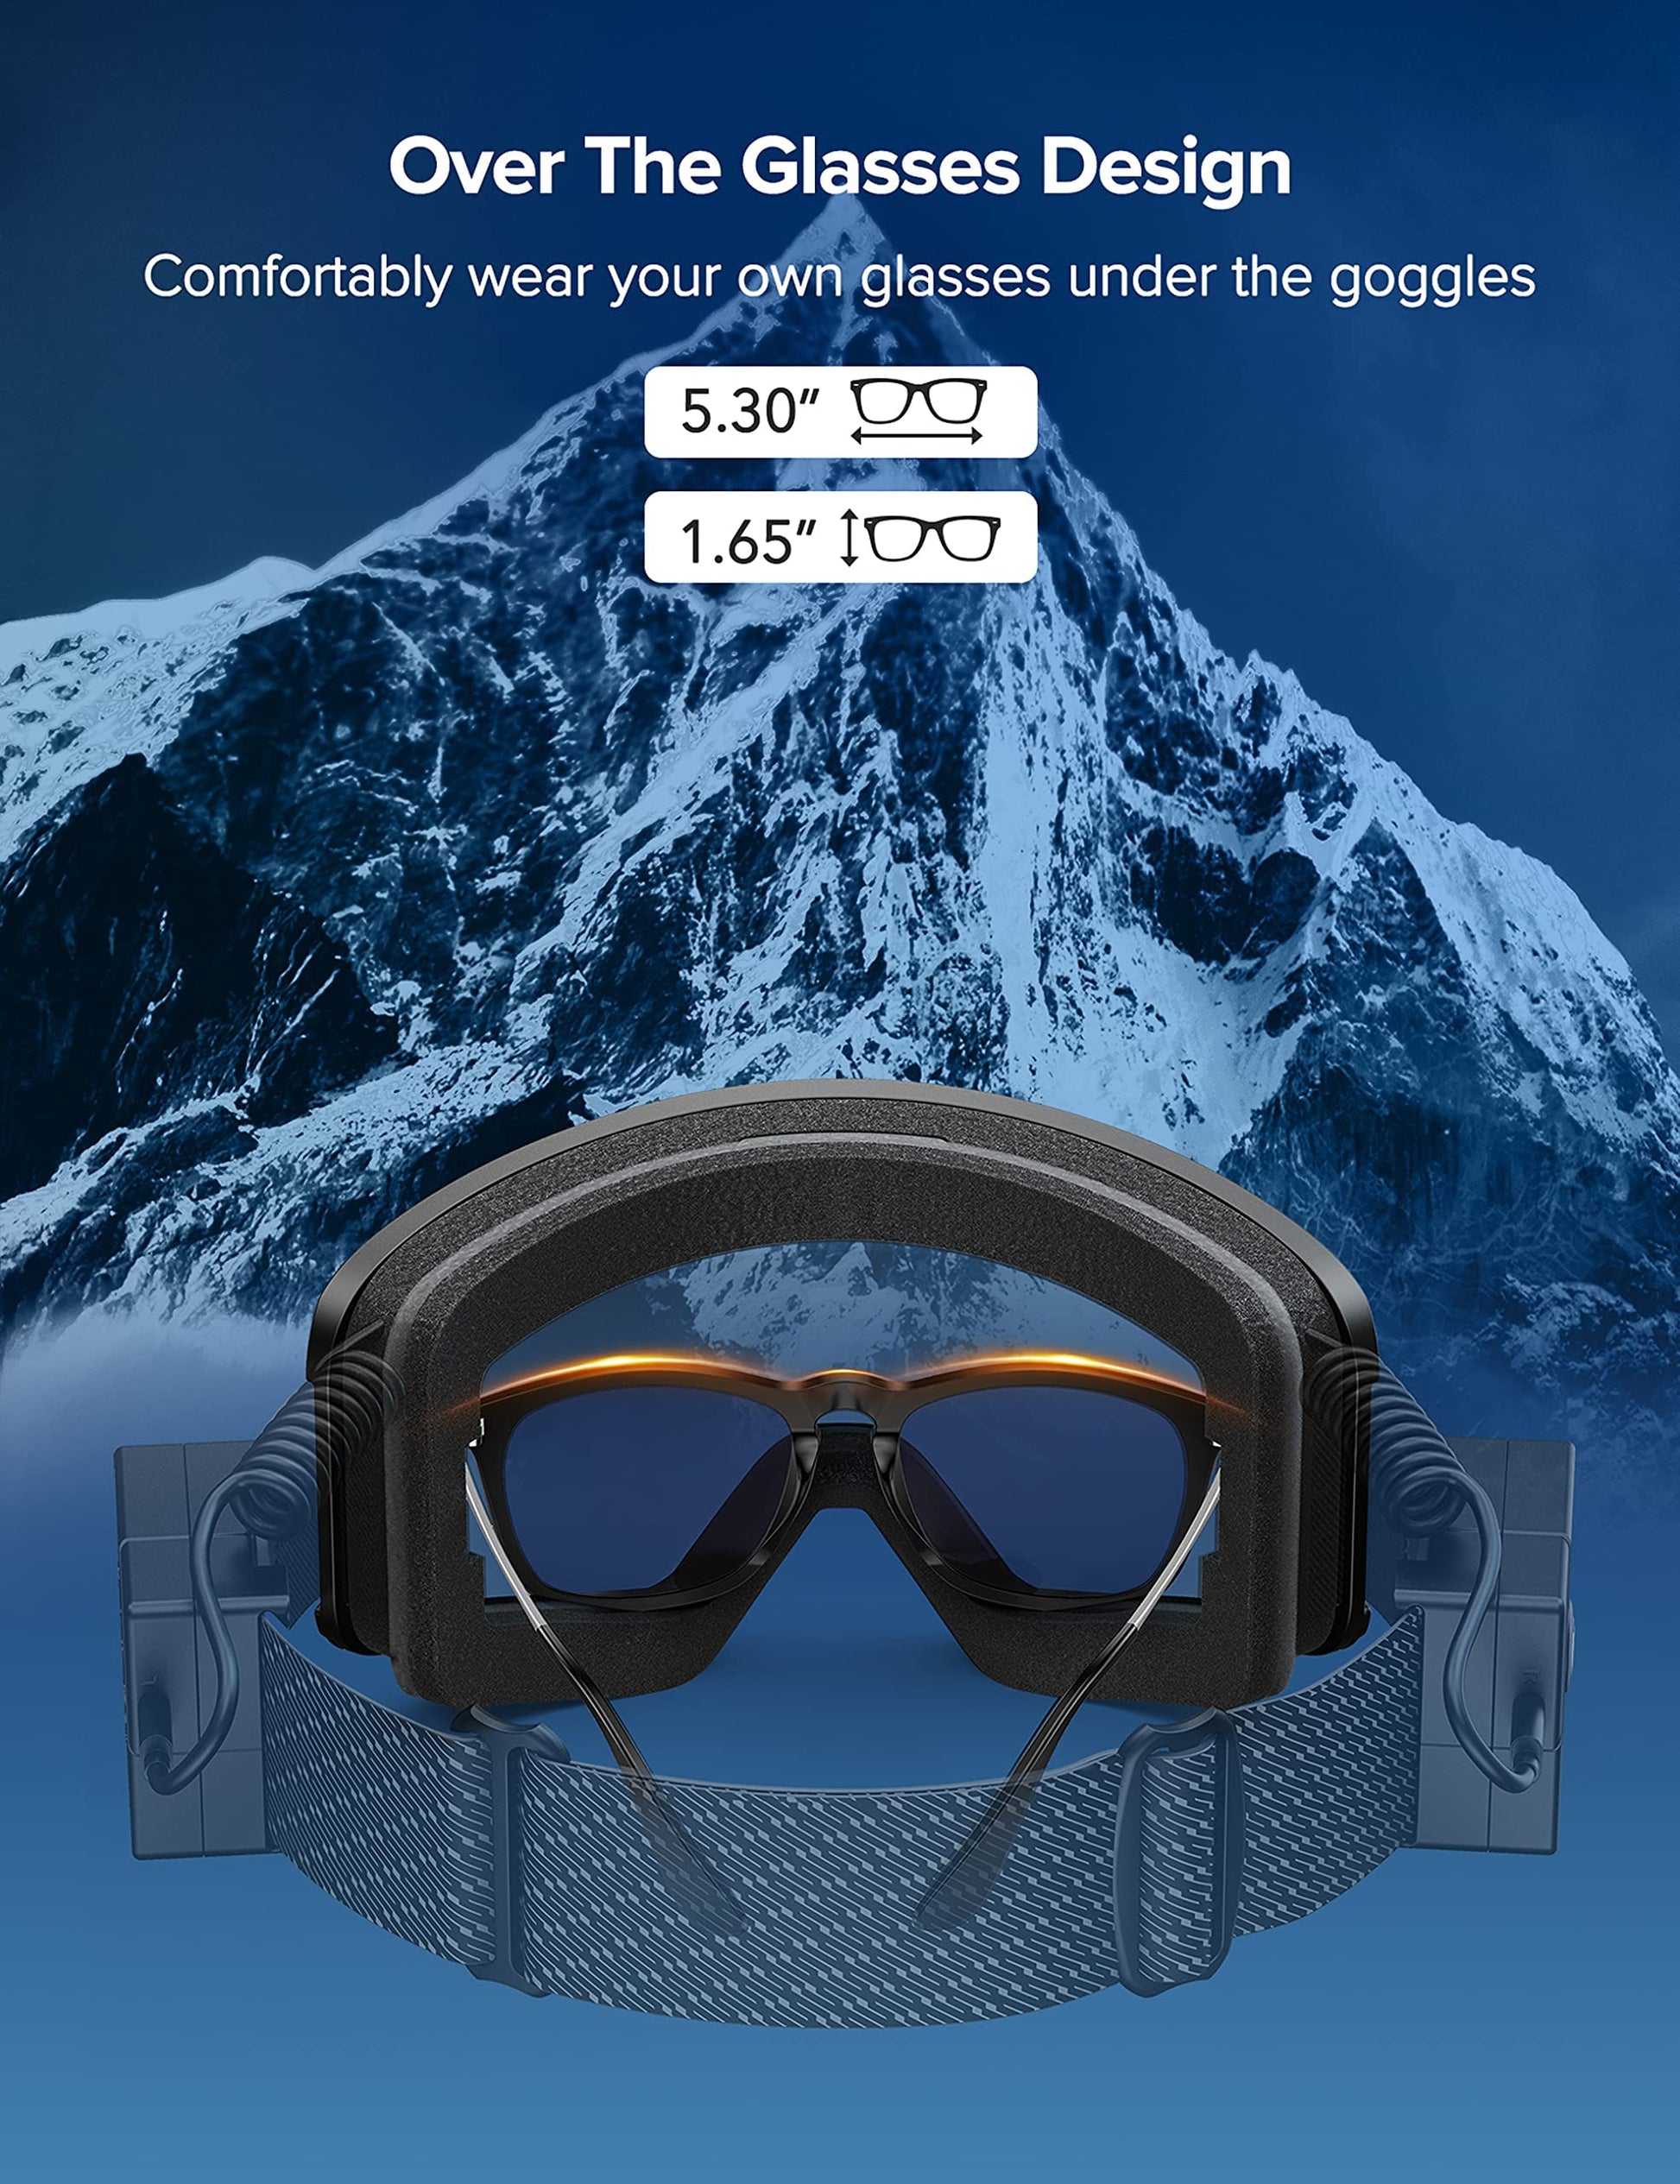 Ski Goggles, Heated Graphene Anti-Fog Lens Grey - Opticdeals